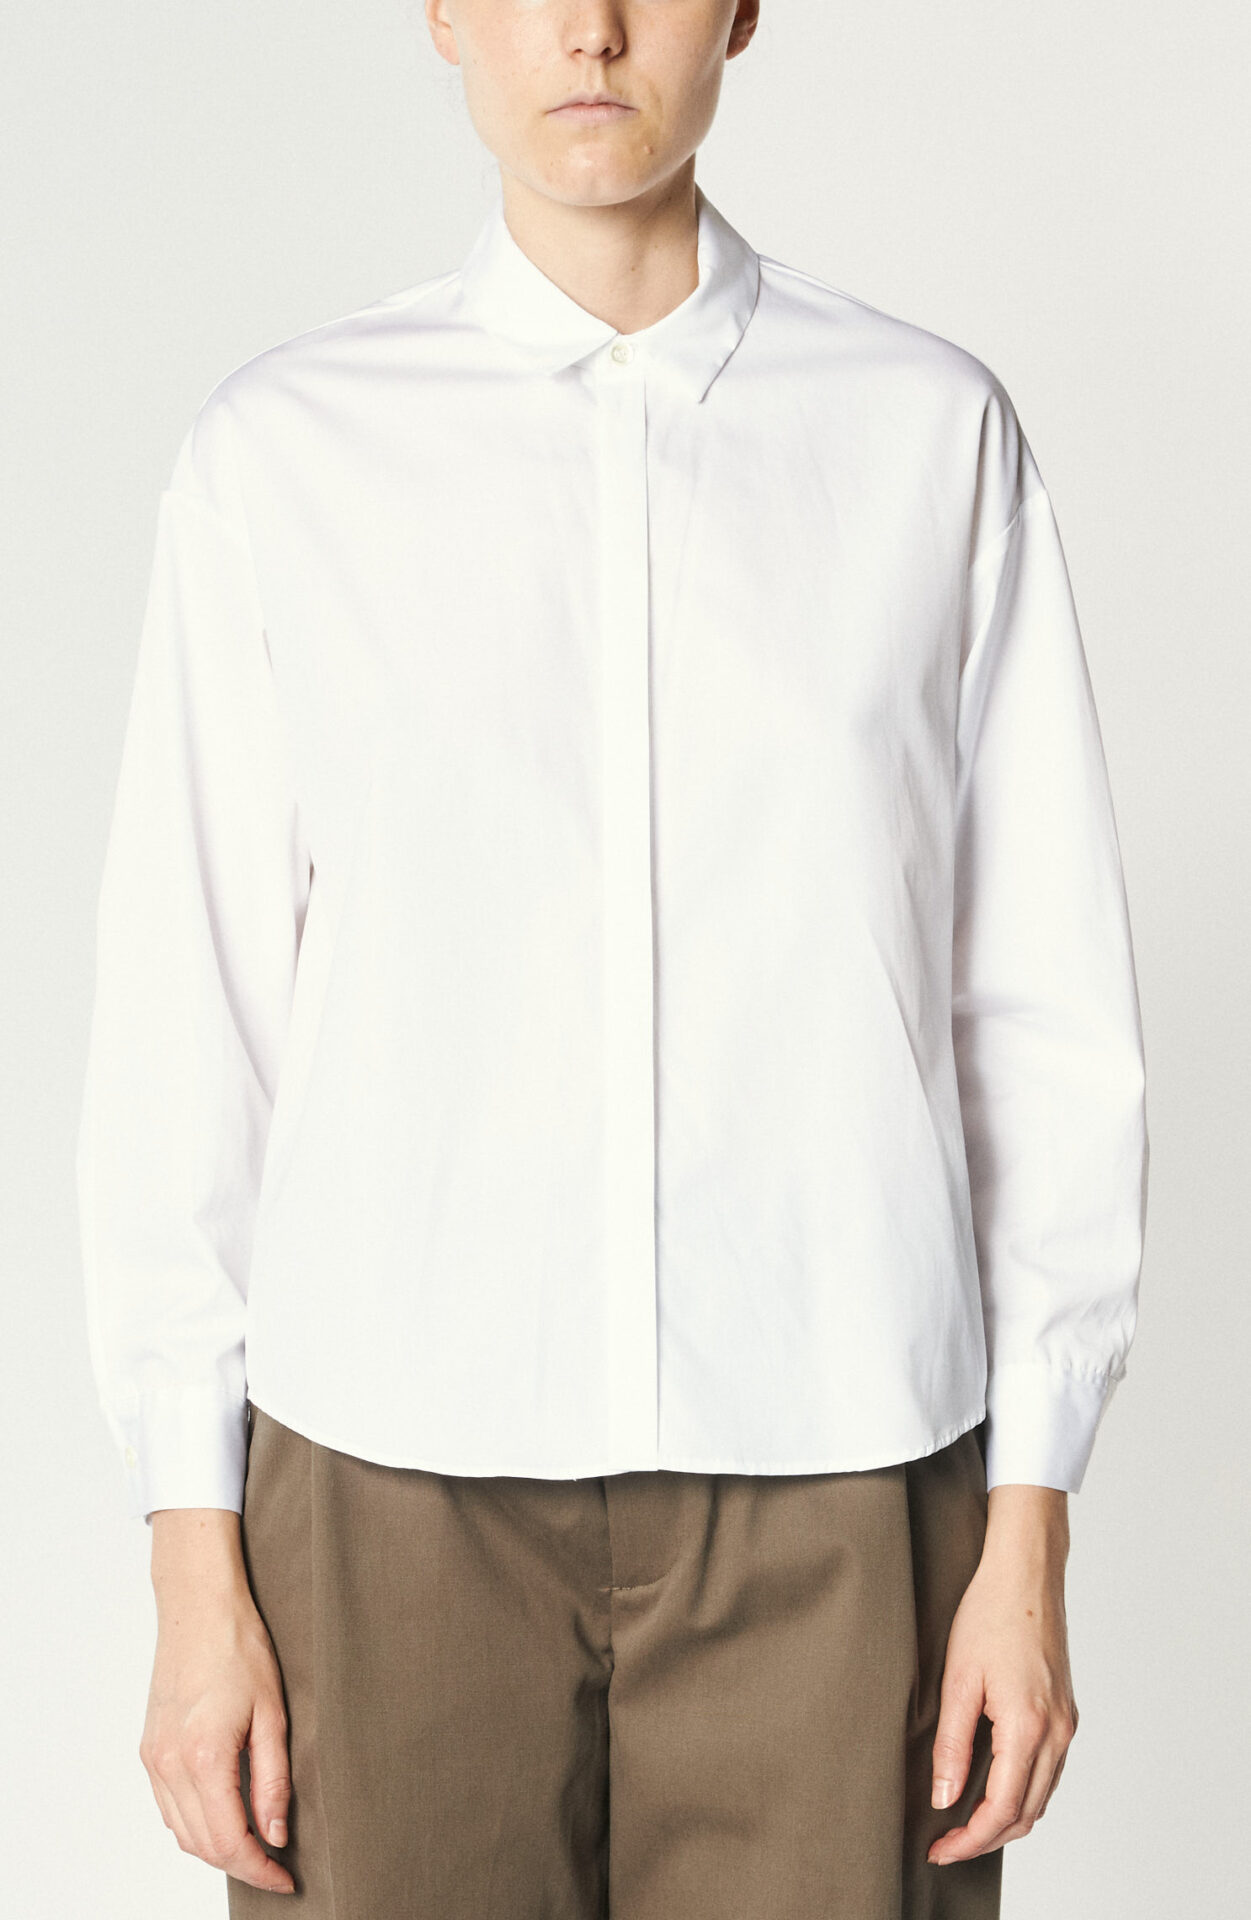 Stephan Schneider Transparante blouse zwart-wolwit volledige print Mode Blouses Transparante blousen 